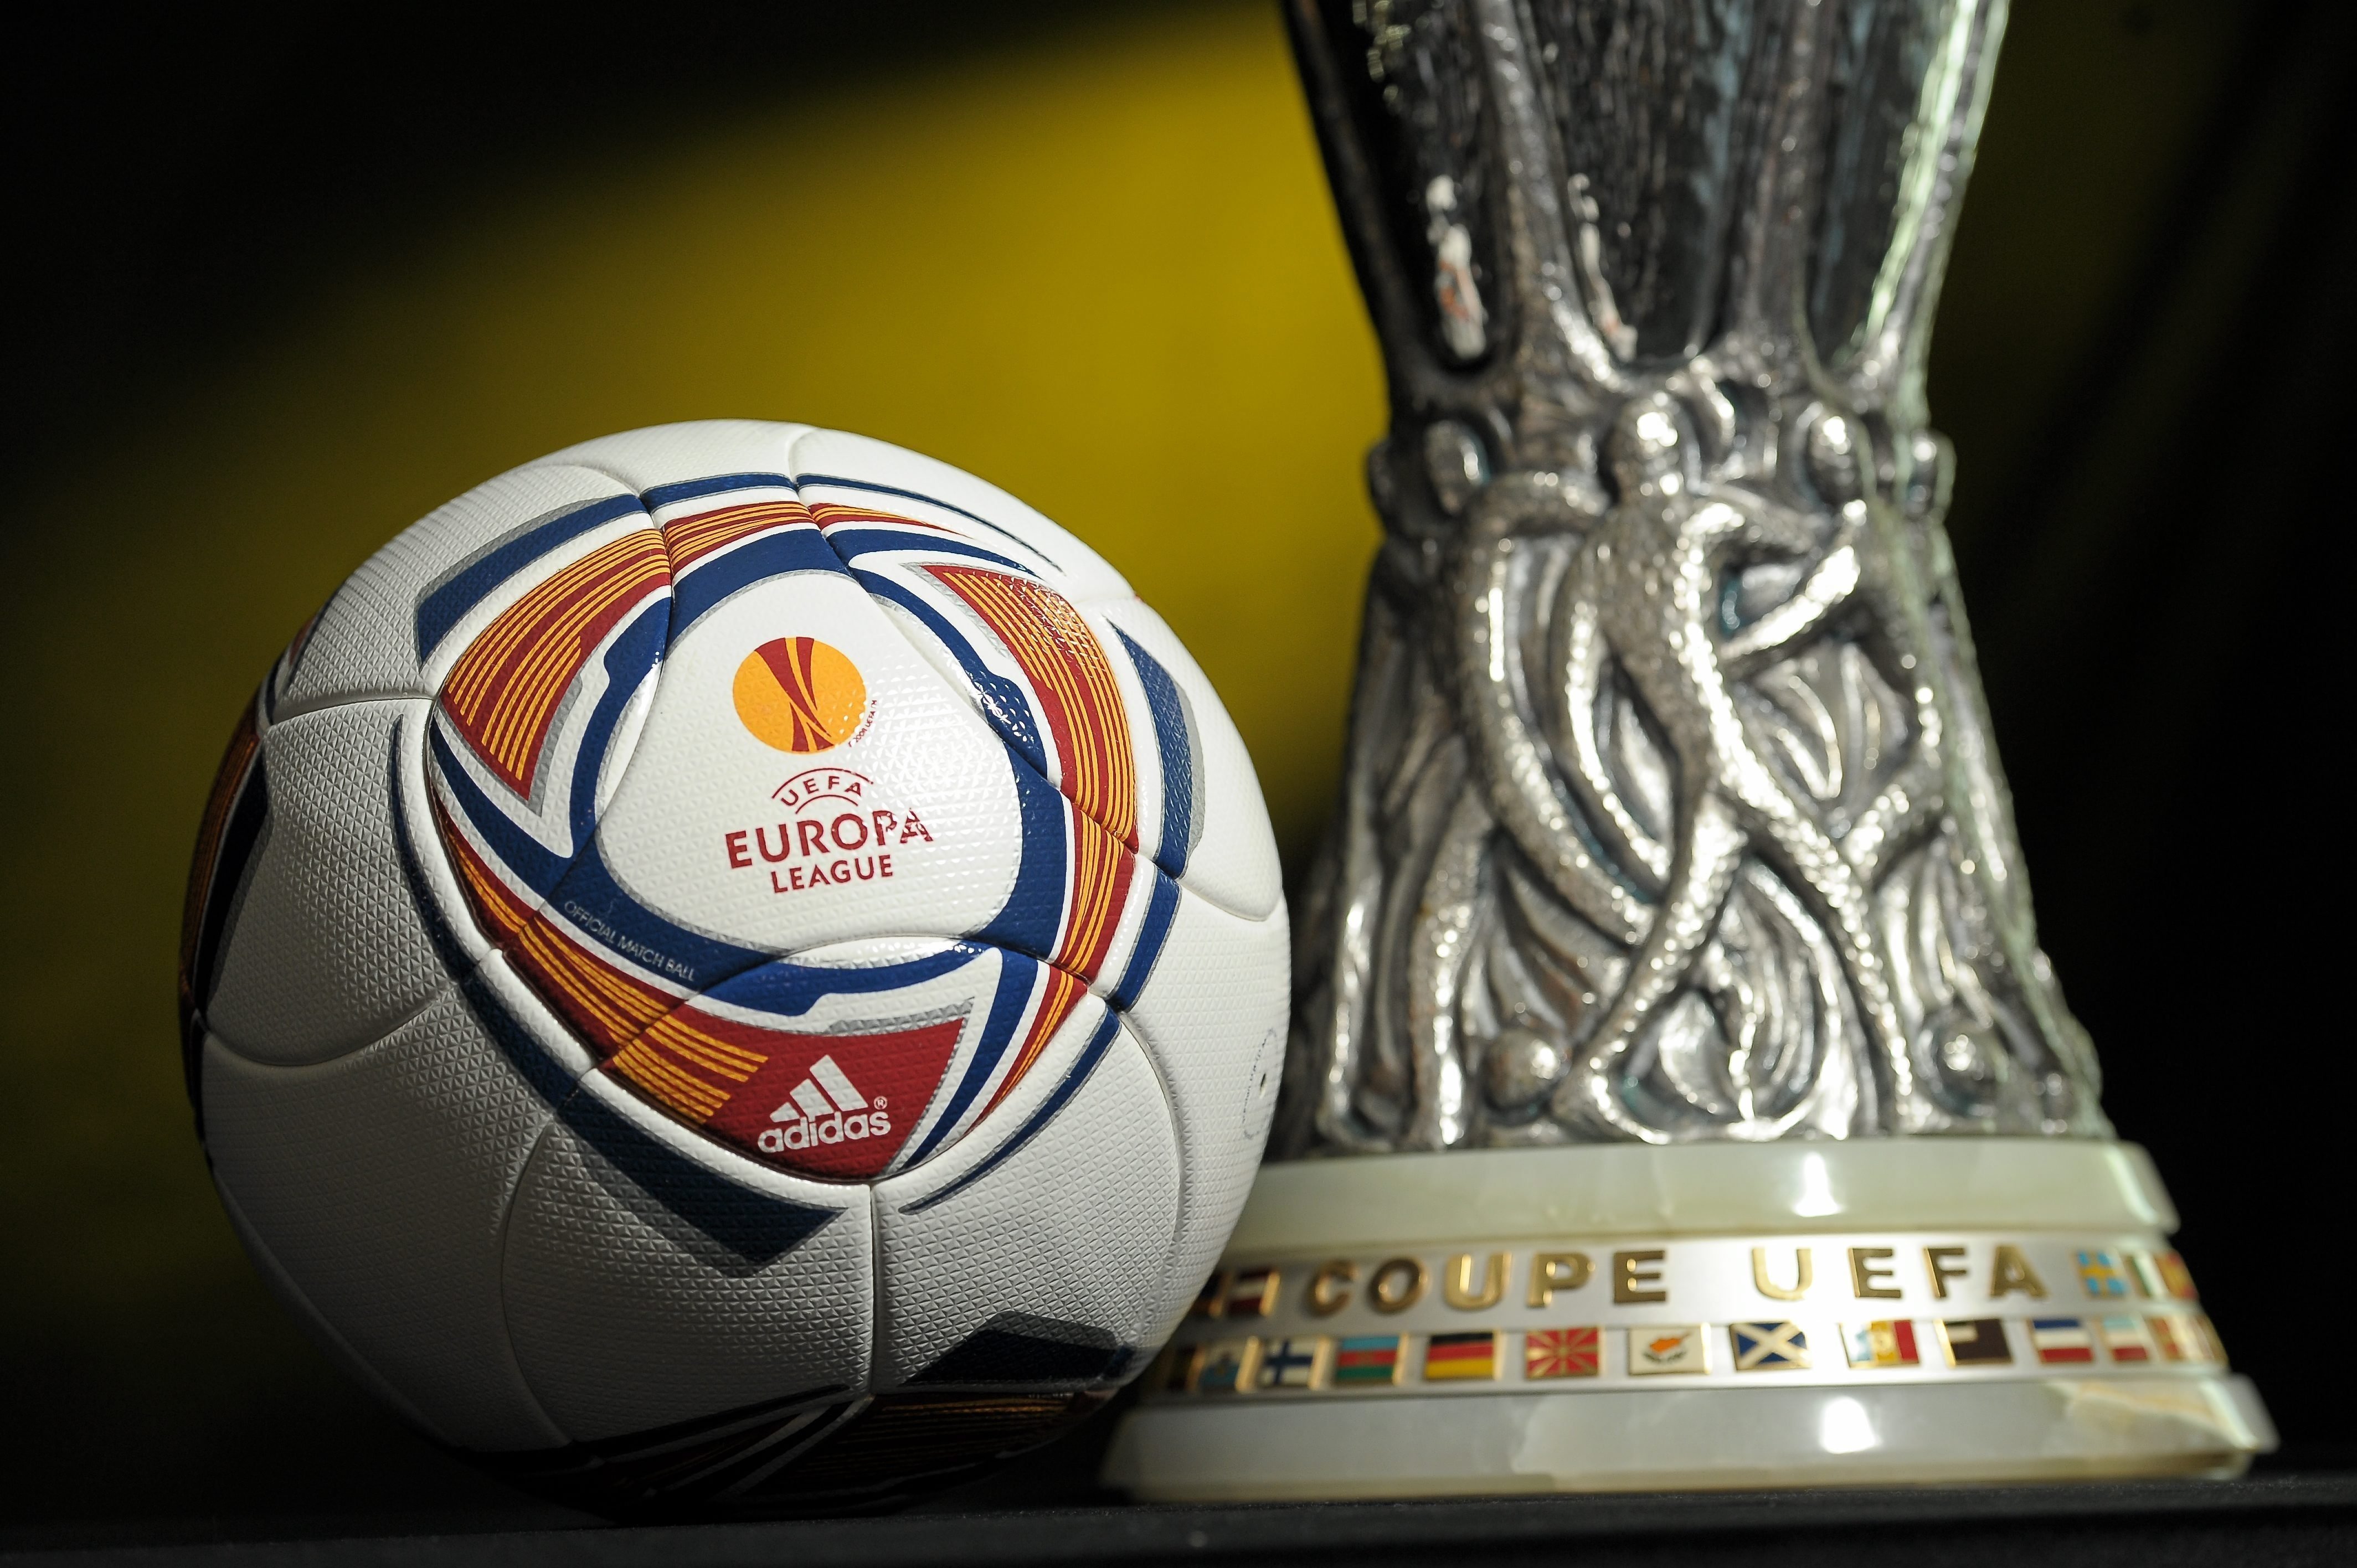 Ли уефа. UEFA Europa League. UEFA Europa League Кубок. Adidas Europa League Ball 2011. Кубок УЕФА лига Европы трофей.